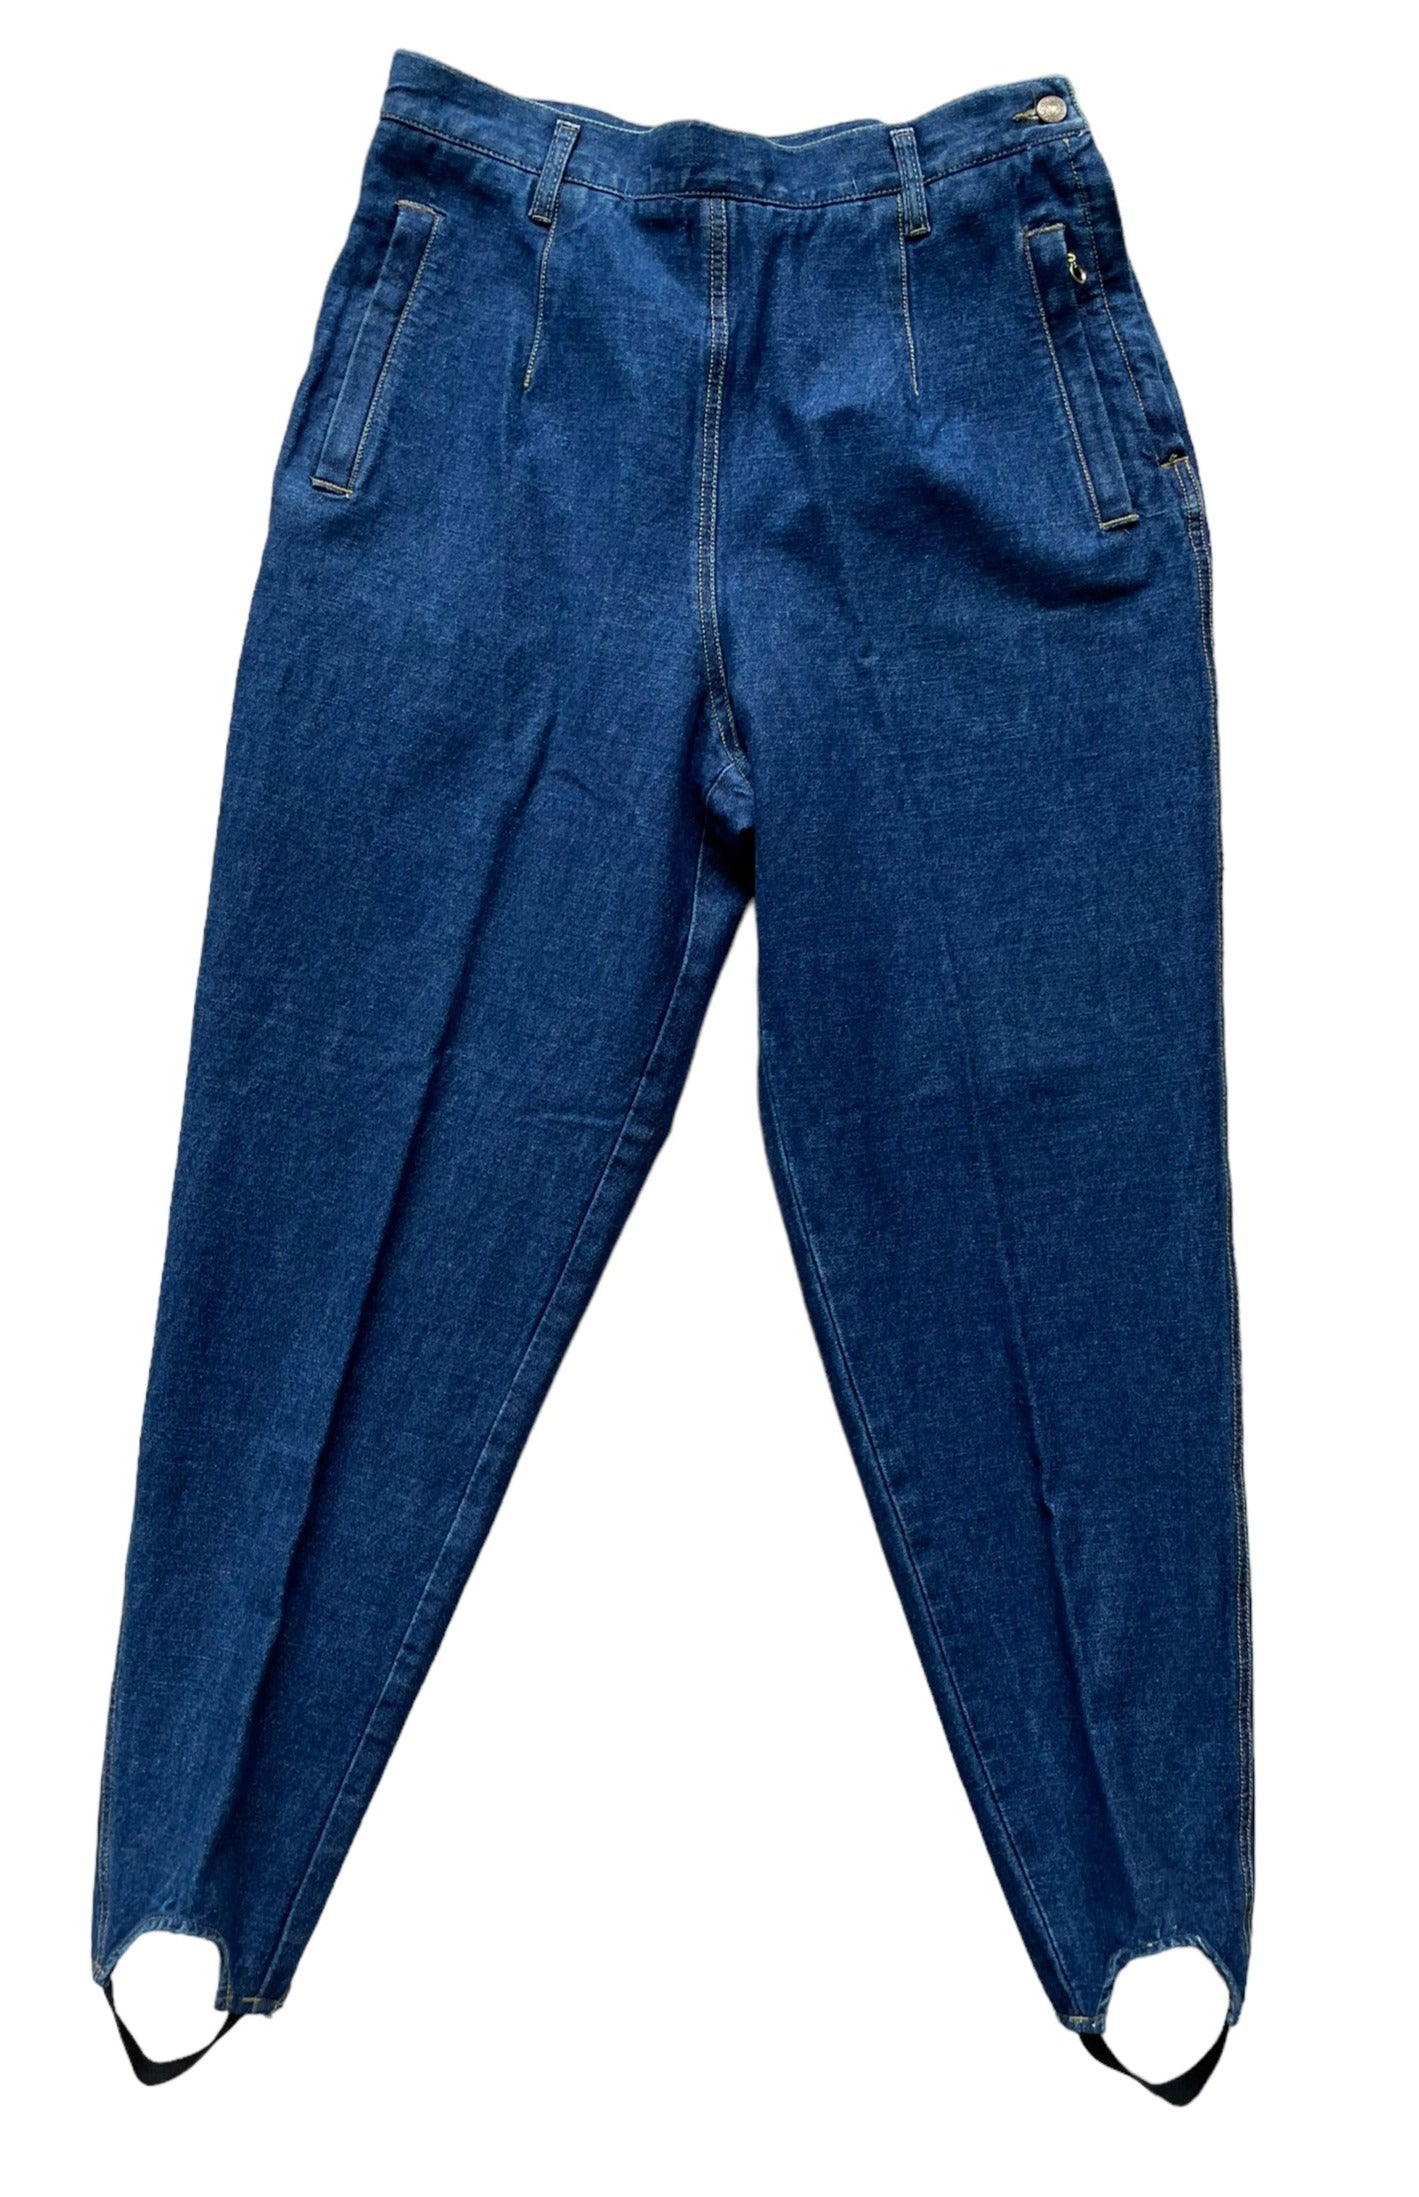 Full front view of Vintage Deadstock 80's Liz Claiborne Side Zip Stir Up Jeans